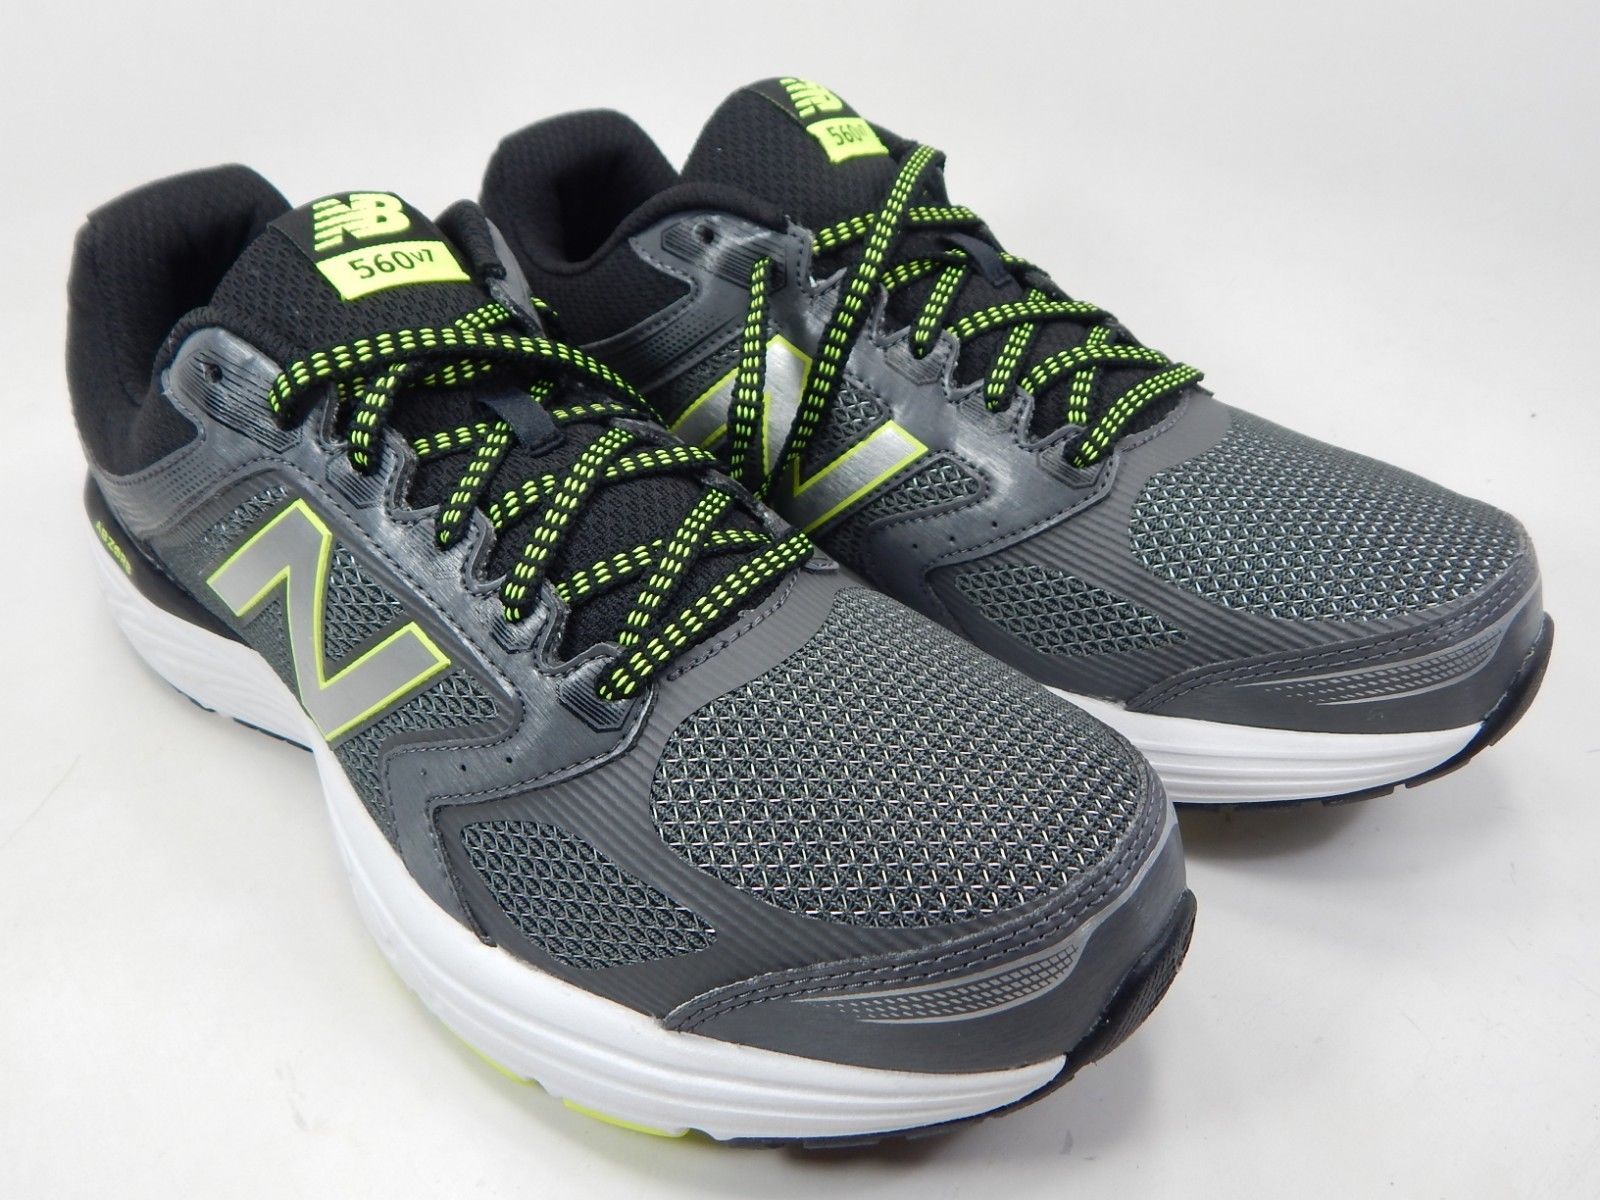 New Balance 560 v7 Size 9.5 M (D) EU 43 Men's Running Shoes Gray ...